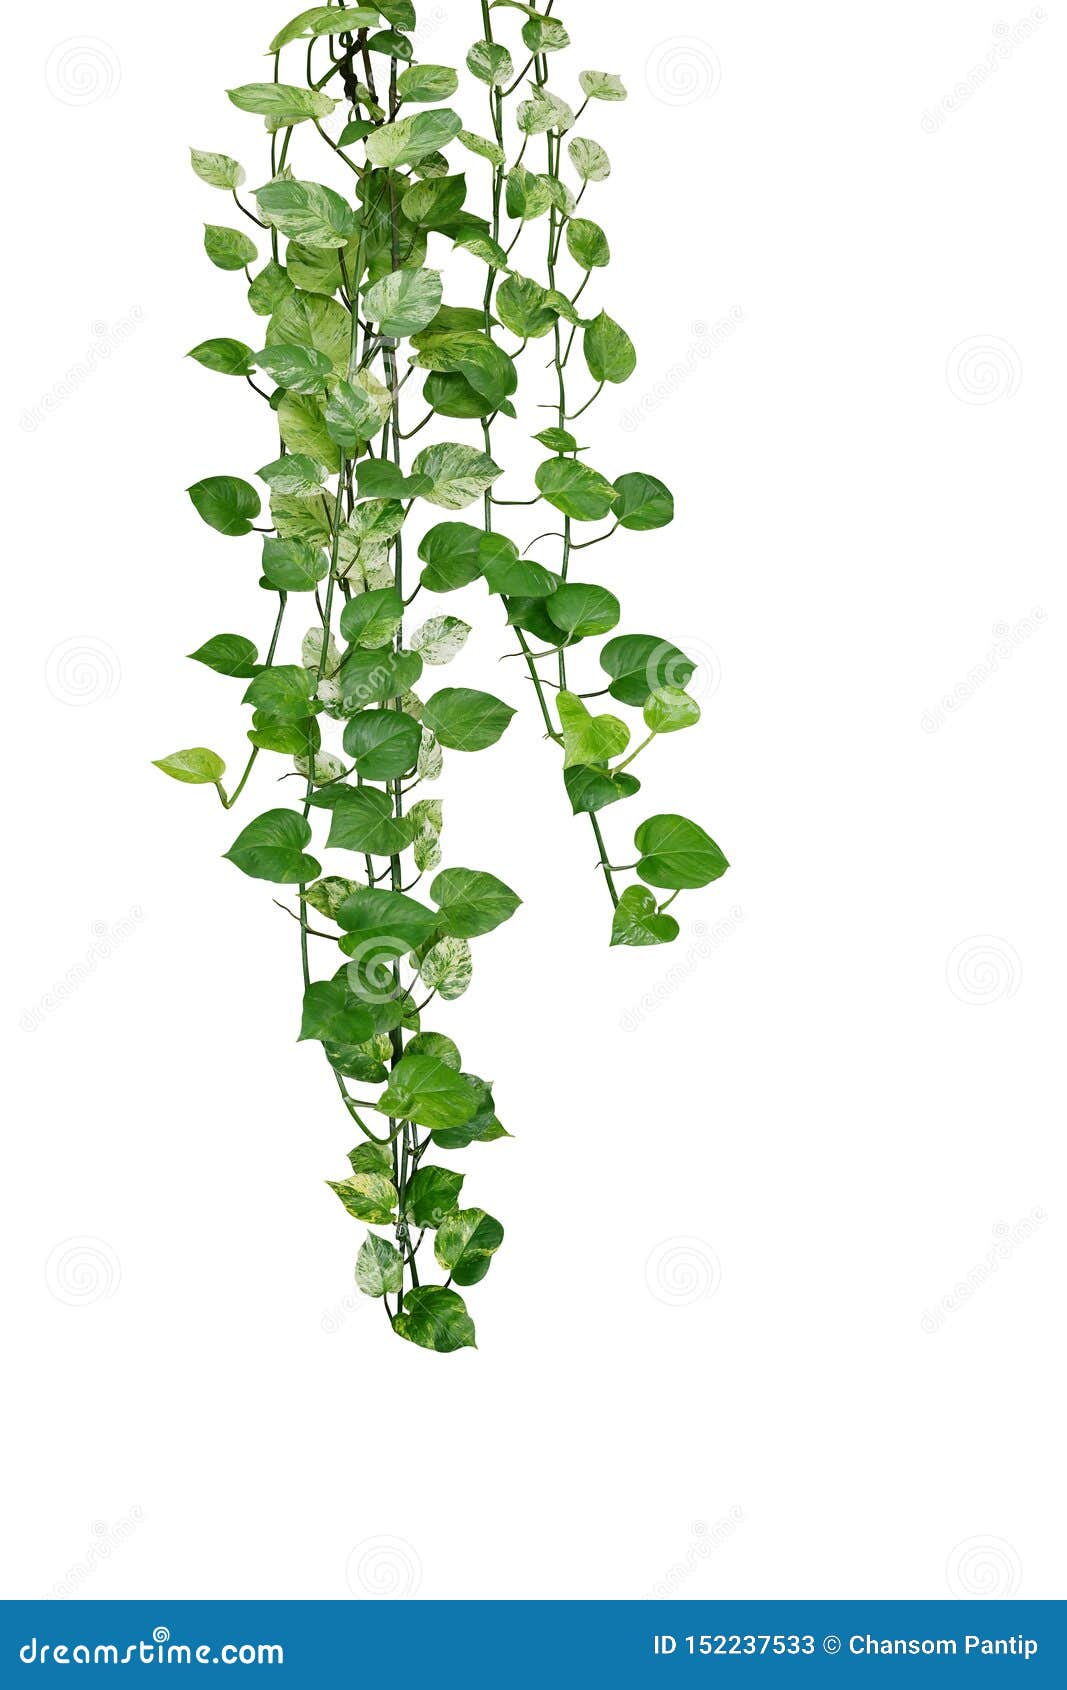 hanging pothos or devil`s ivy vines liana plant with green and variegated leaves epipremnum aureum Ã¢â¬Ëmarble queen pothosÃ¢â¬â¢,